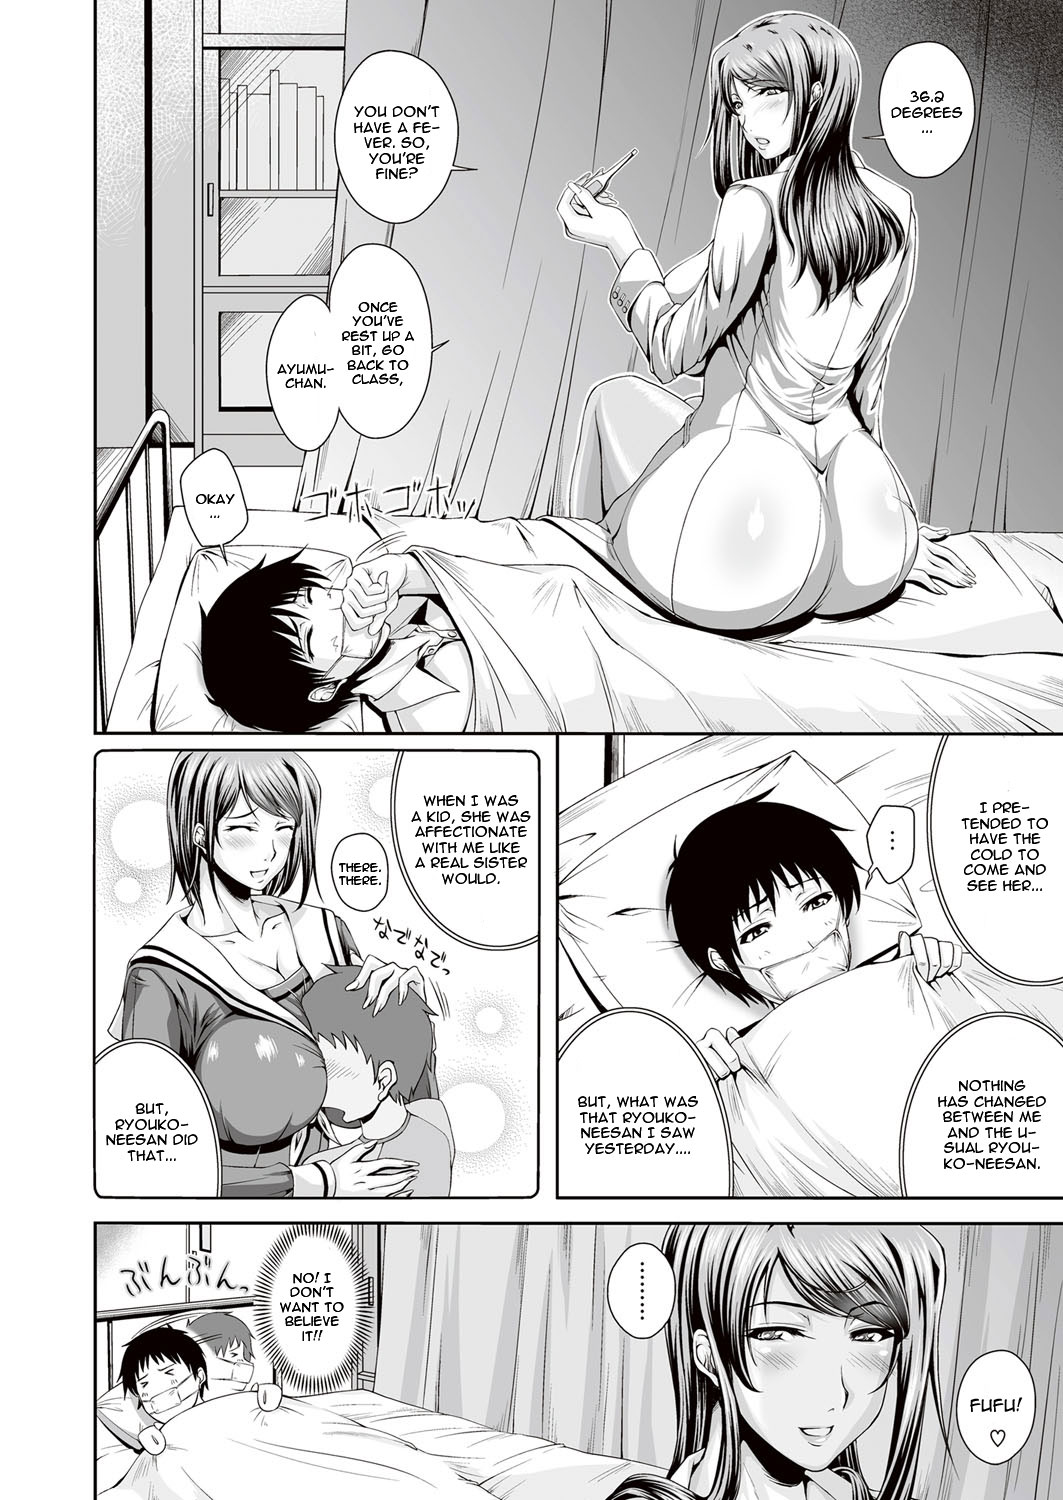 Read Sexy School Infirmary Comic Megastore Alpha 2013 09 [english] Hentai Online Porn Manga